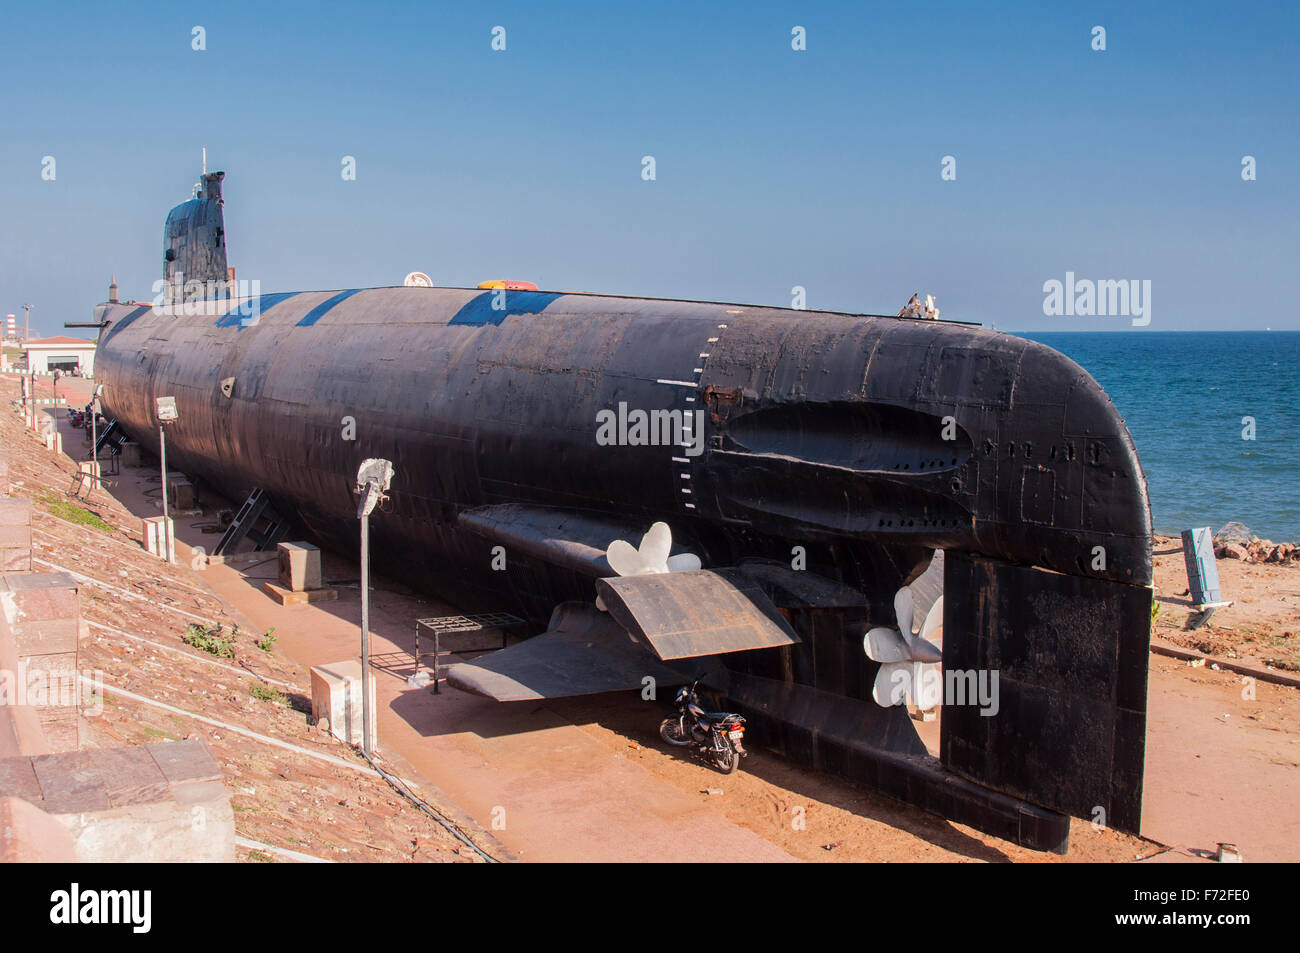 VMRDA INS Kursura Submarine Museum, U-Boot der Kalvari-Klasse, RK Beach Road, Visakhapatnam, Andhra Pradesh, Indien, Asien, Indische Marine Kalvari-Klasse Diesel-elektrisches U-Boot. Stockfoto